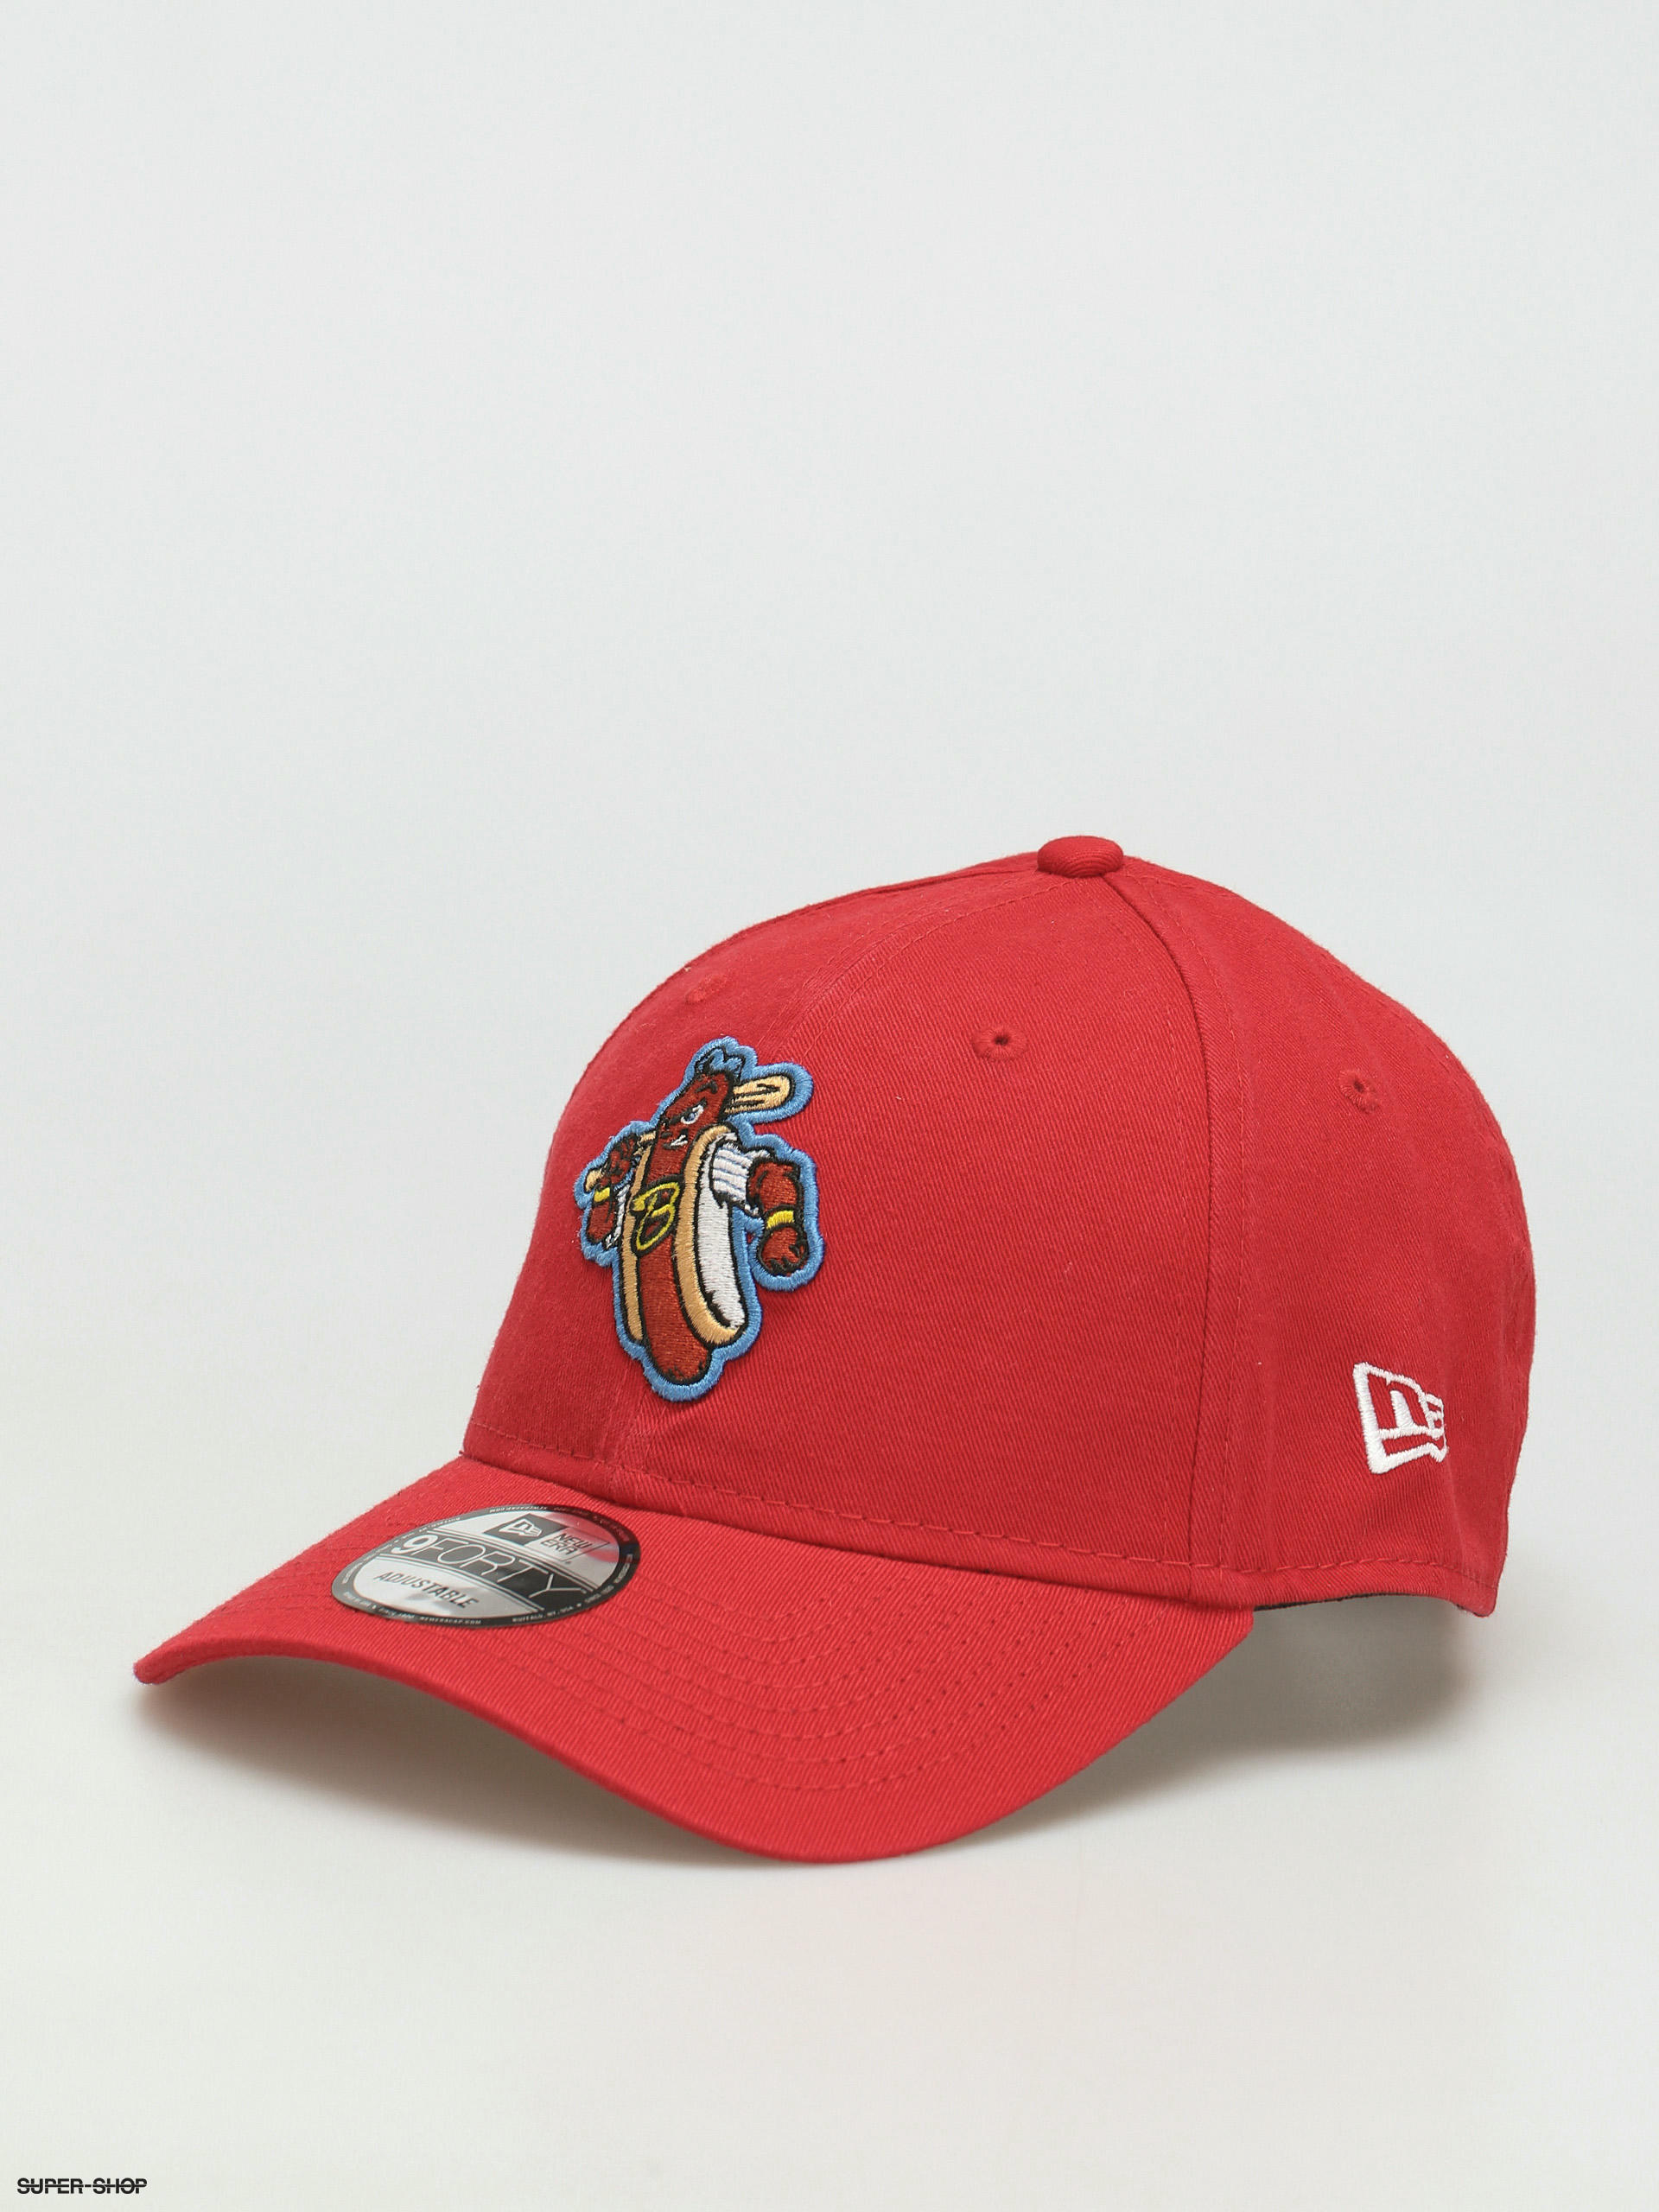 minor league baseball hat